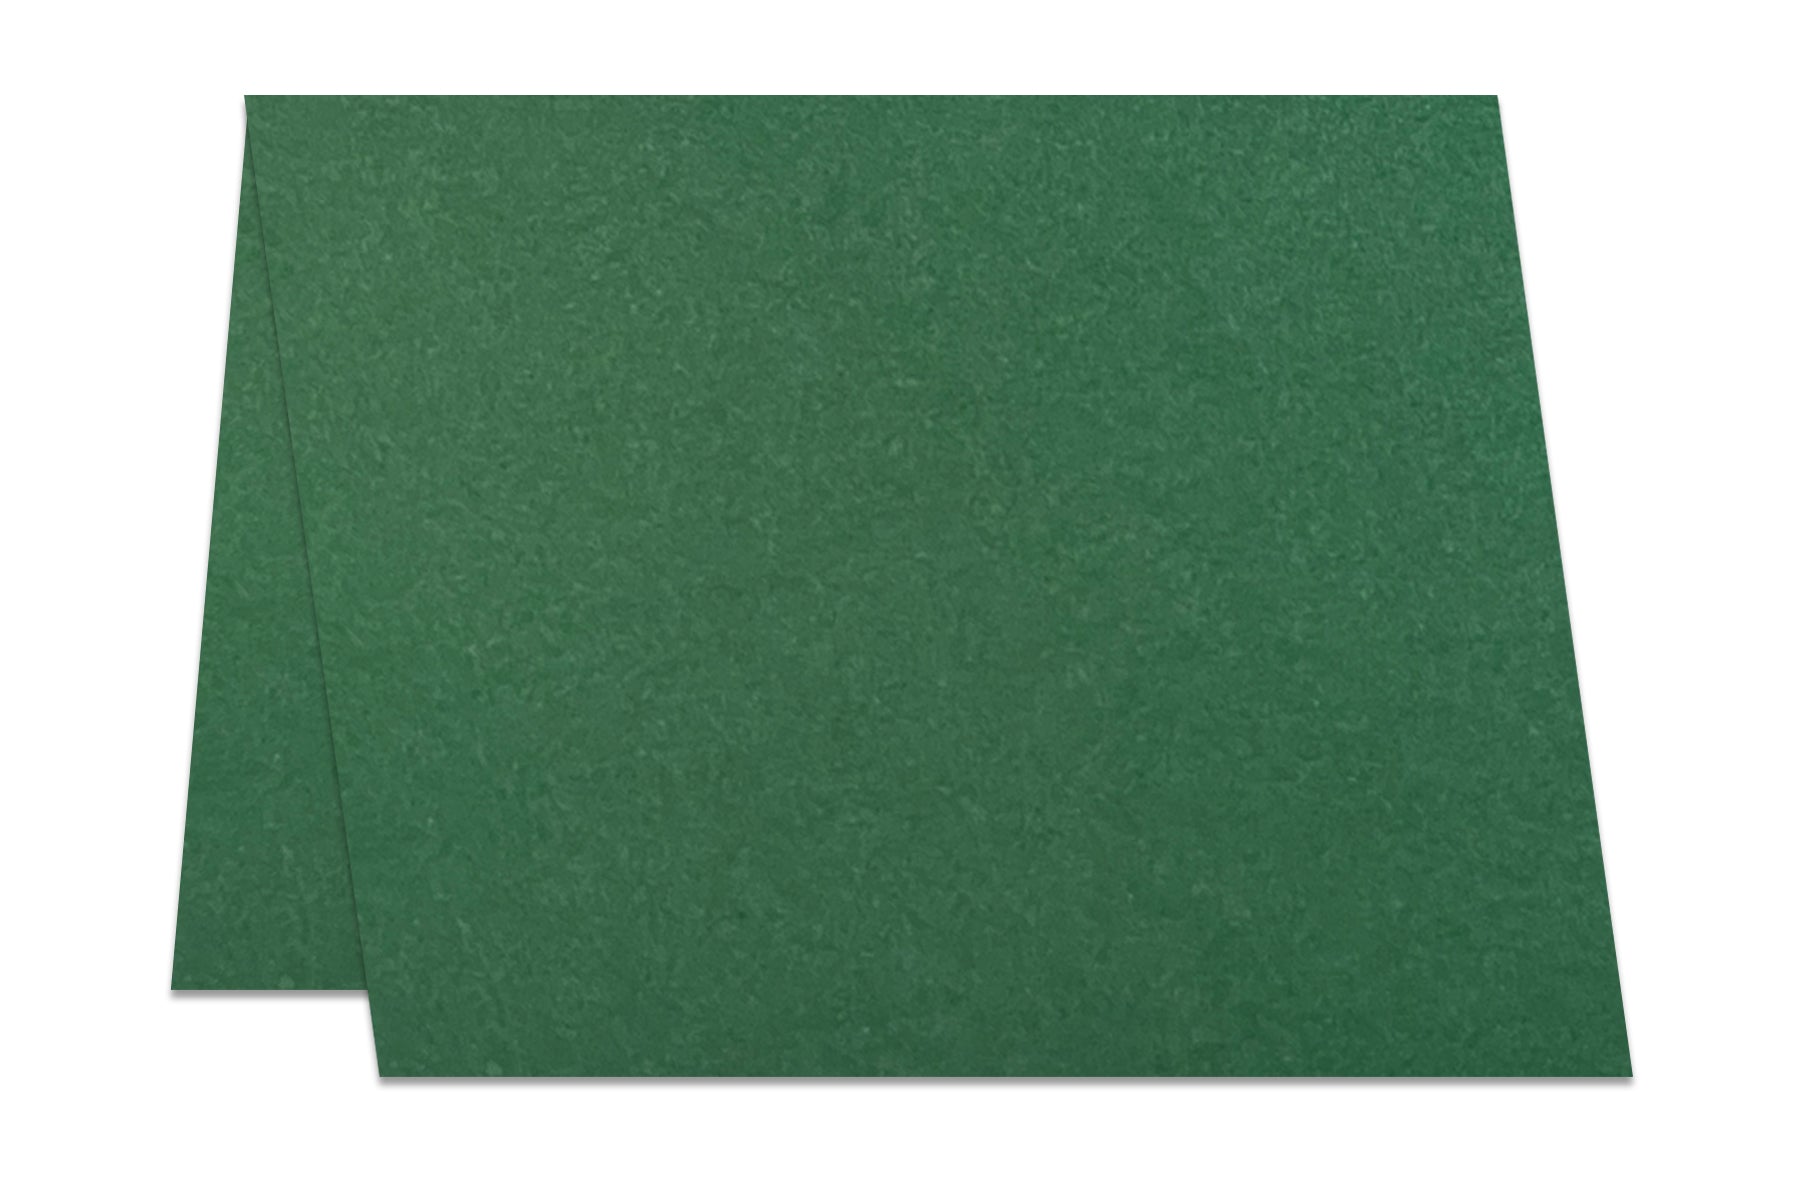 Black Premium A7 Envelopes for your 5x7 DIY invitations - CutCardStock